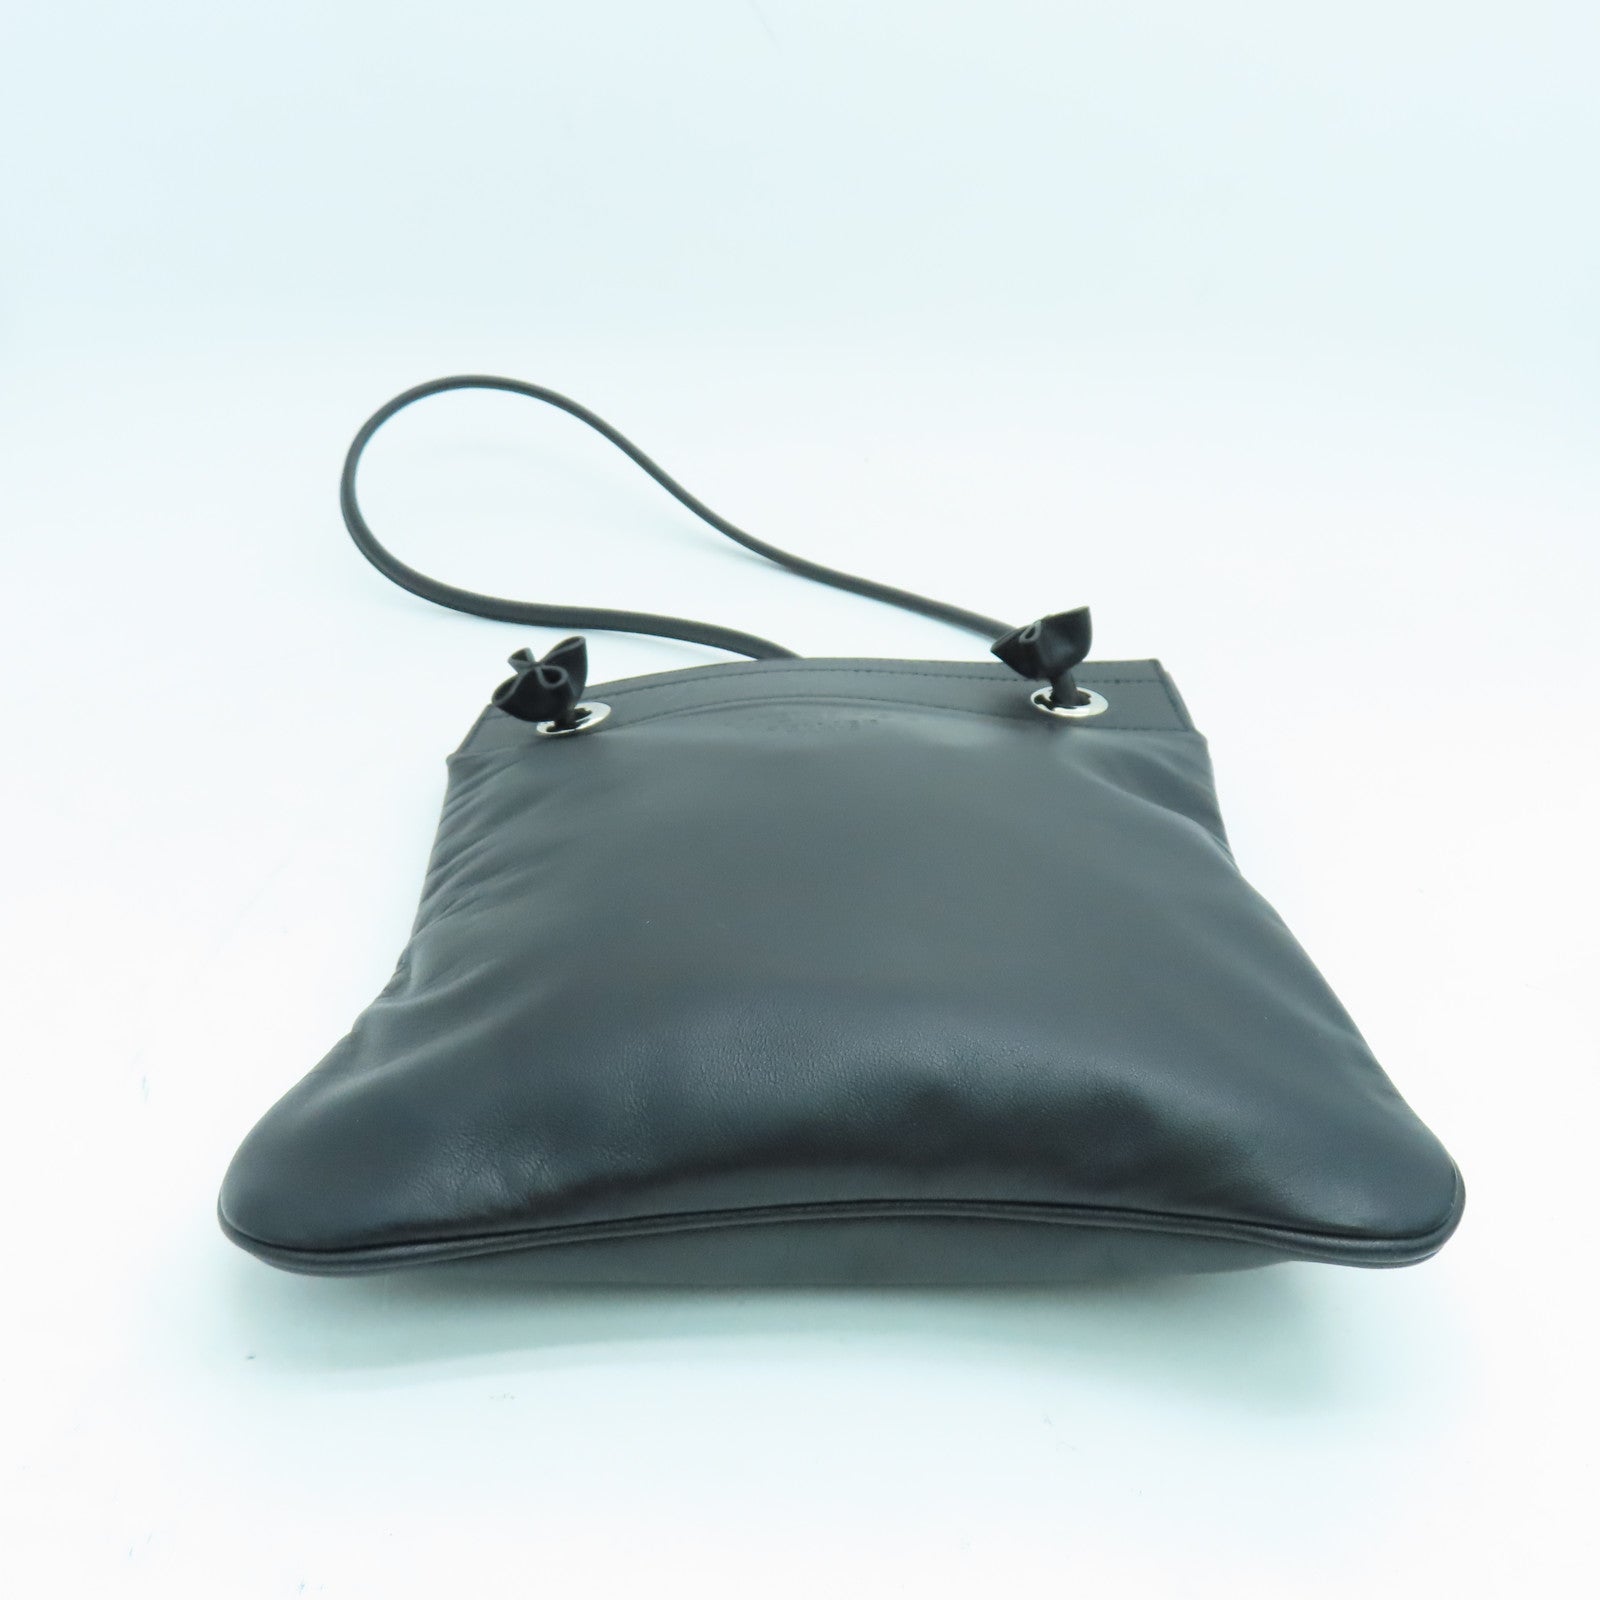 Hermès Swift Aline Mini Crossbody - Pink Crossbody Bags, Handbags -  HER562589